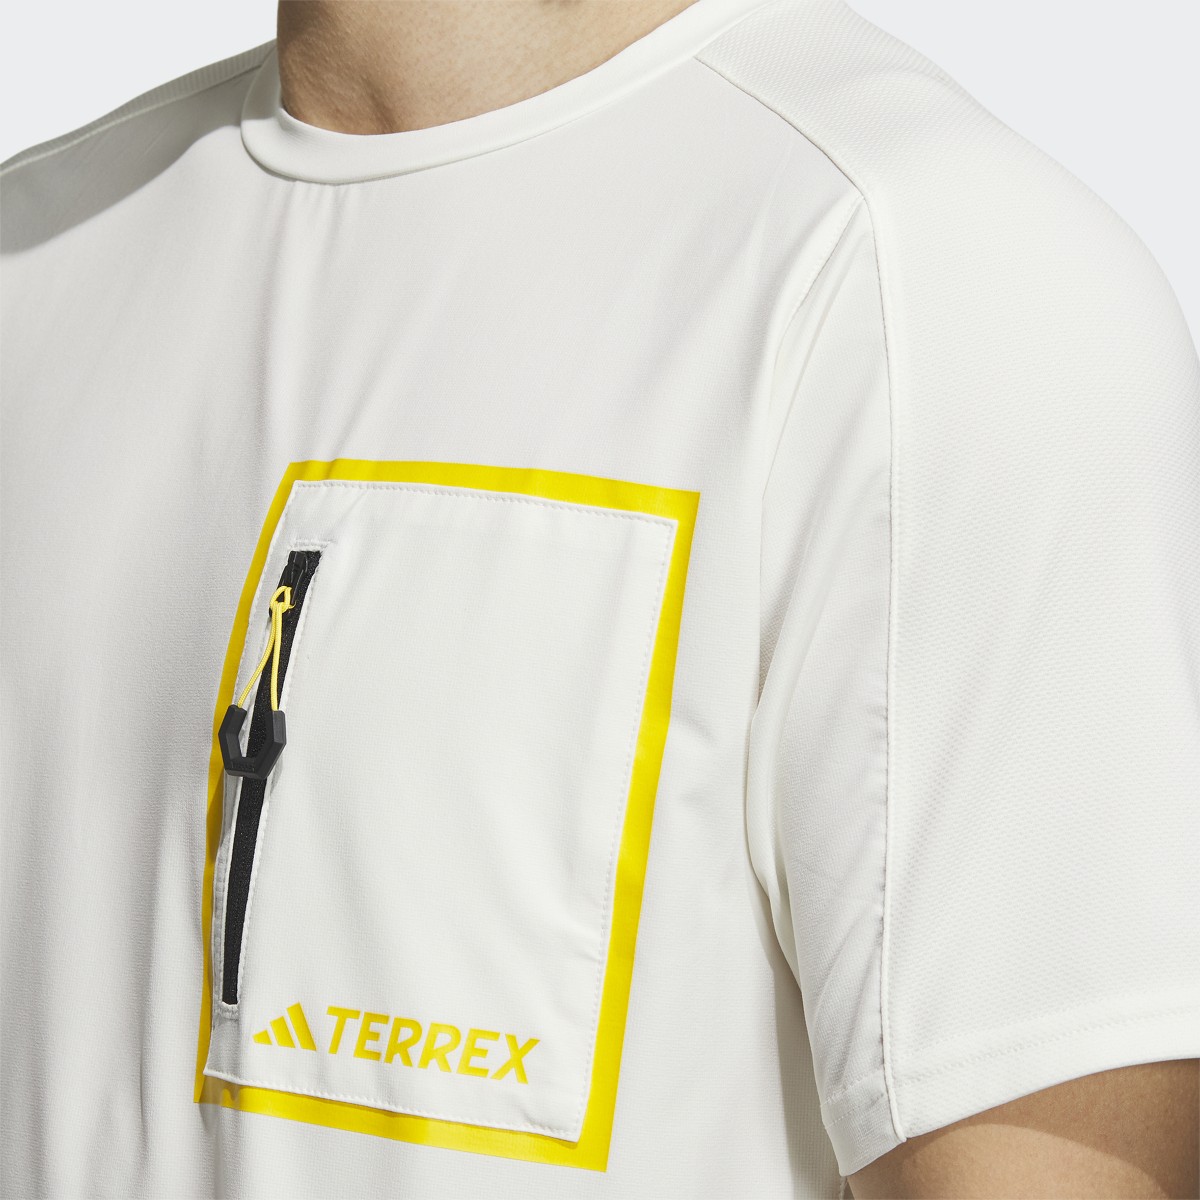 Adidas National Geographic T-Shirt. 7